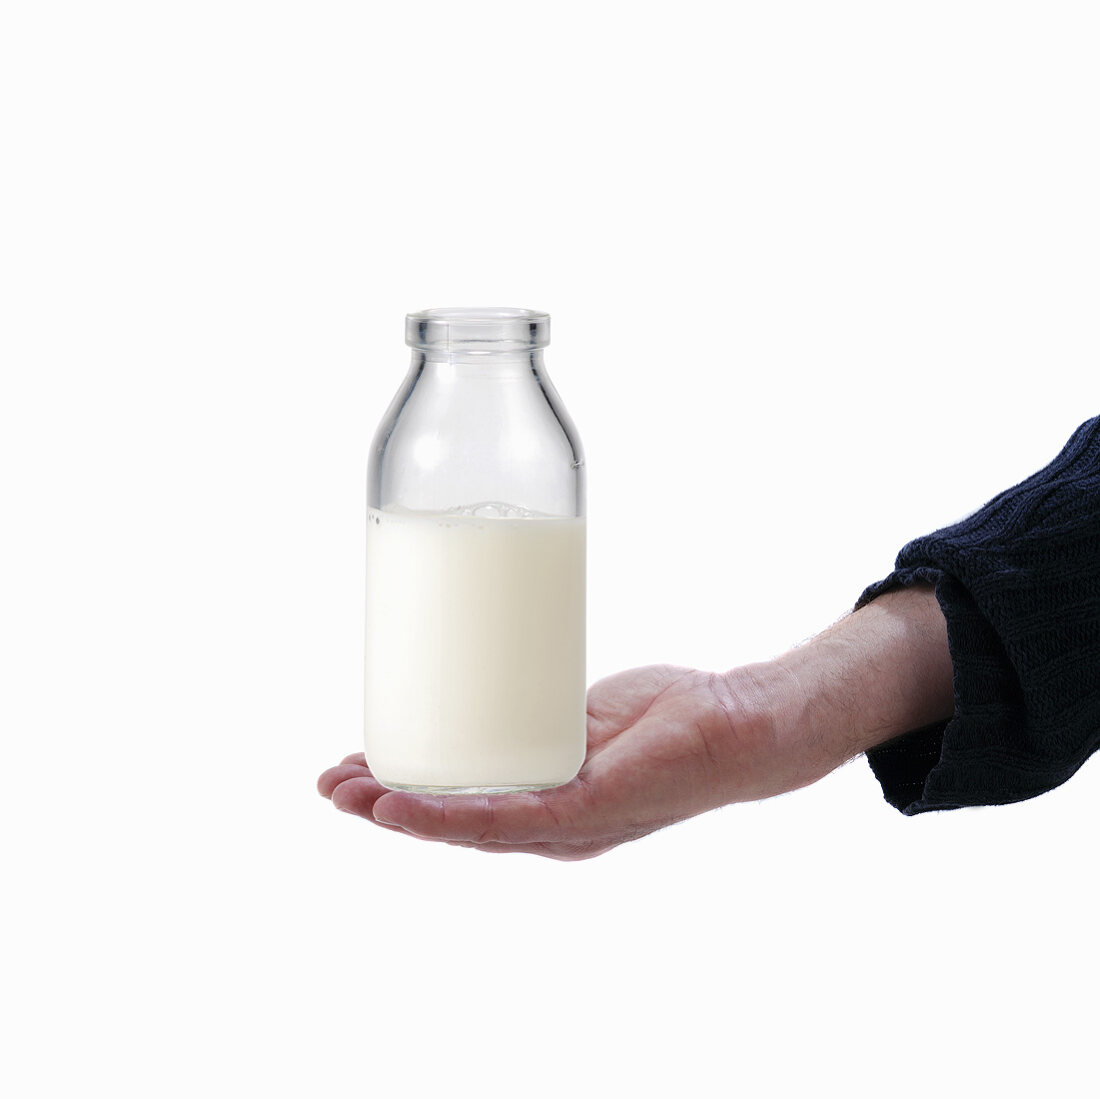 Hand holding a milk bottle